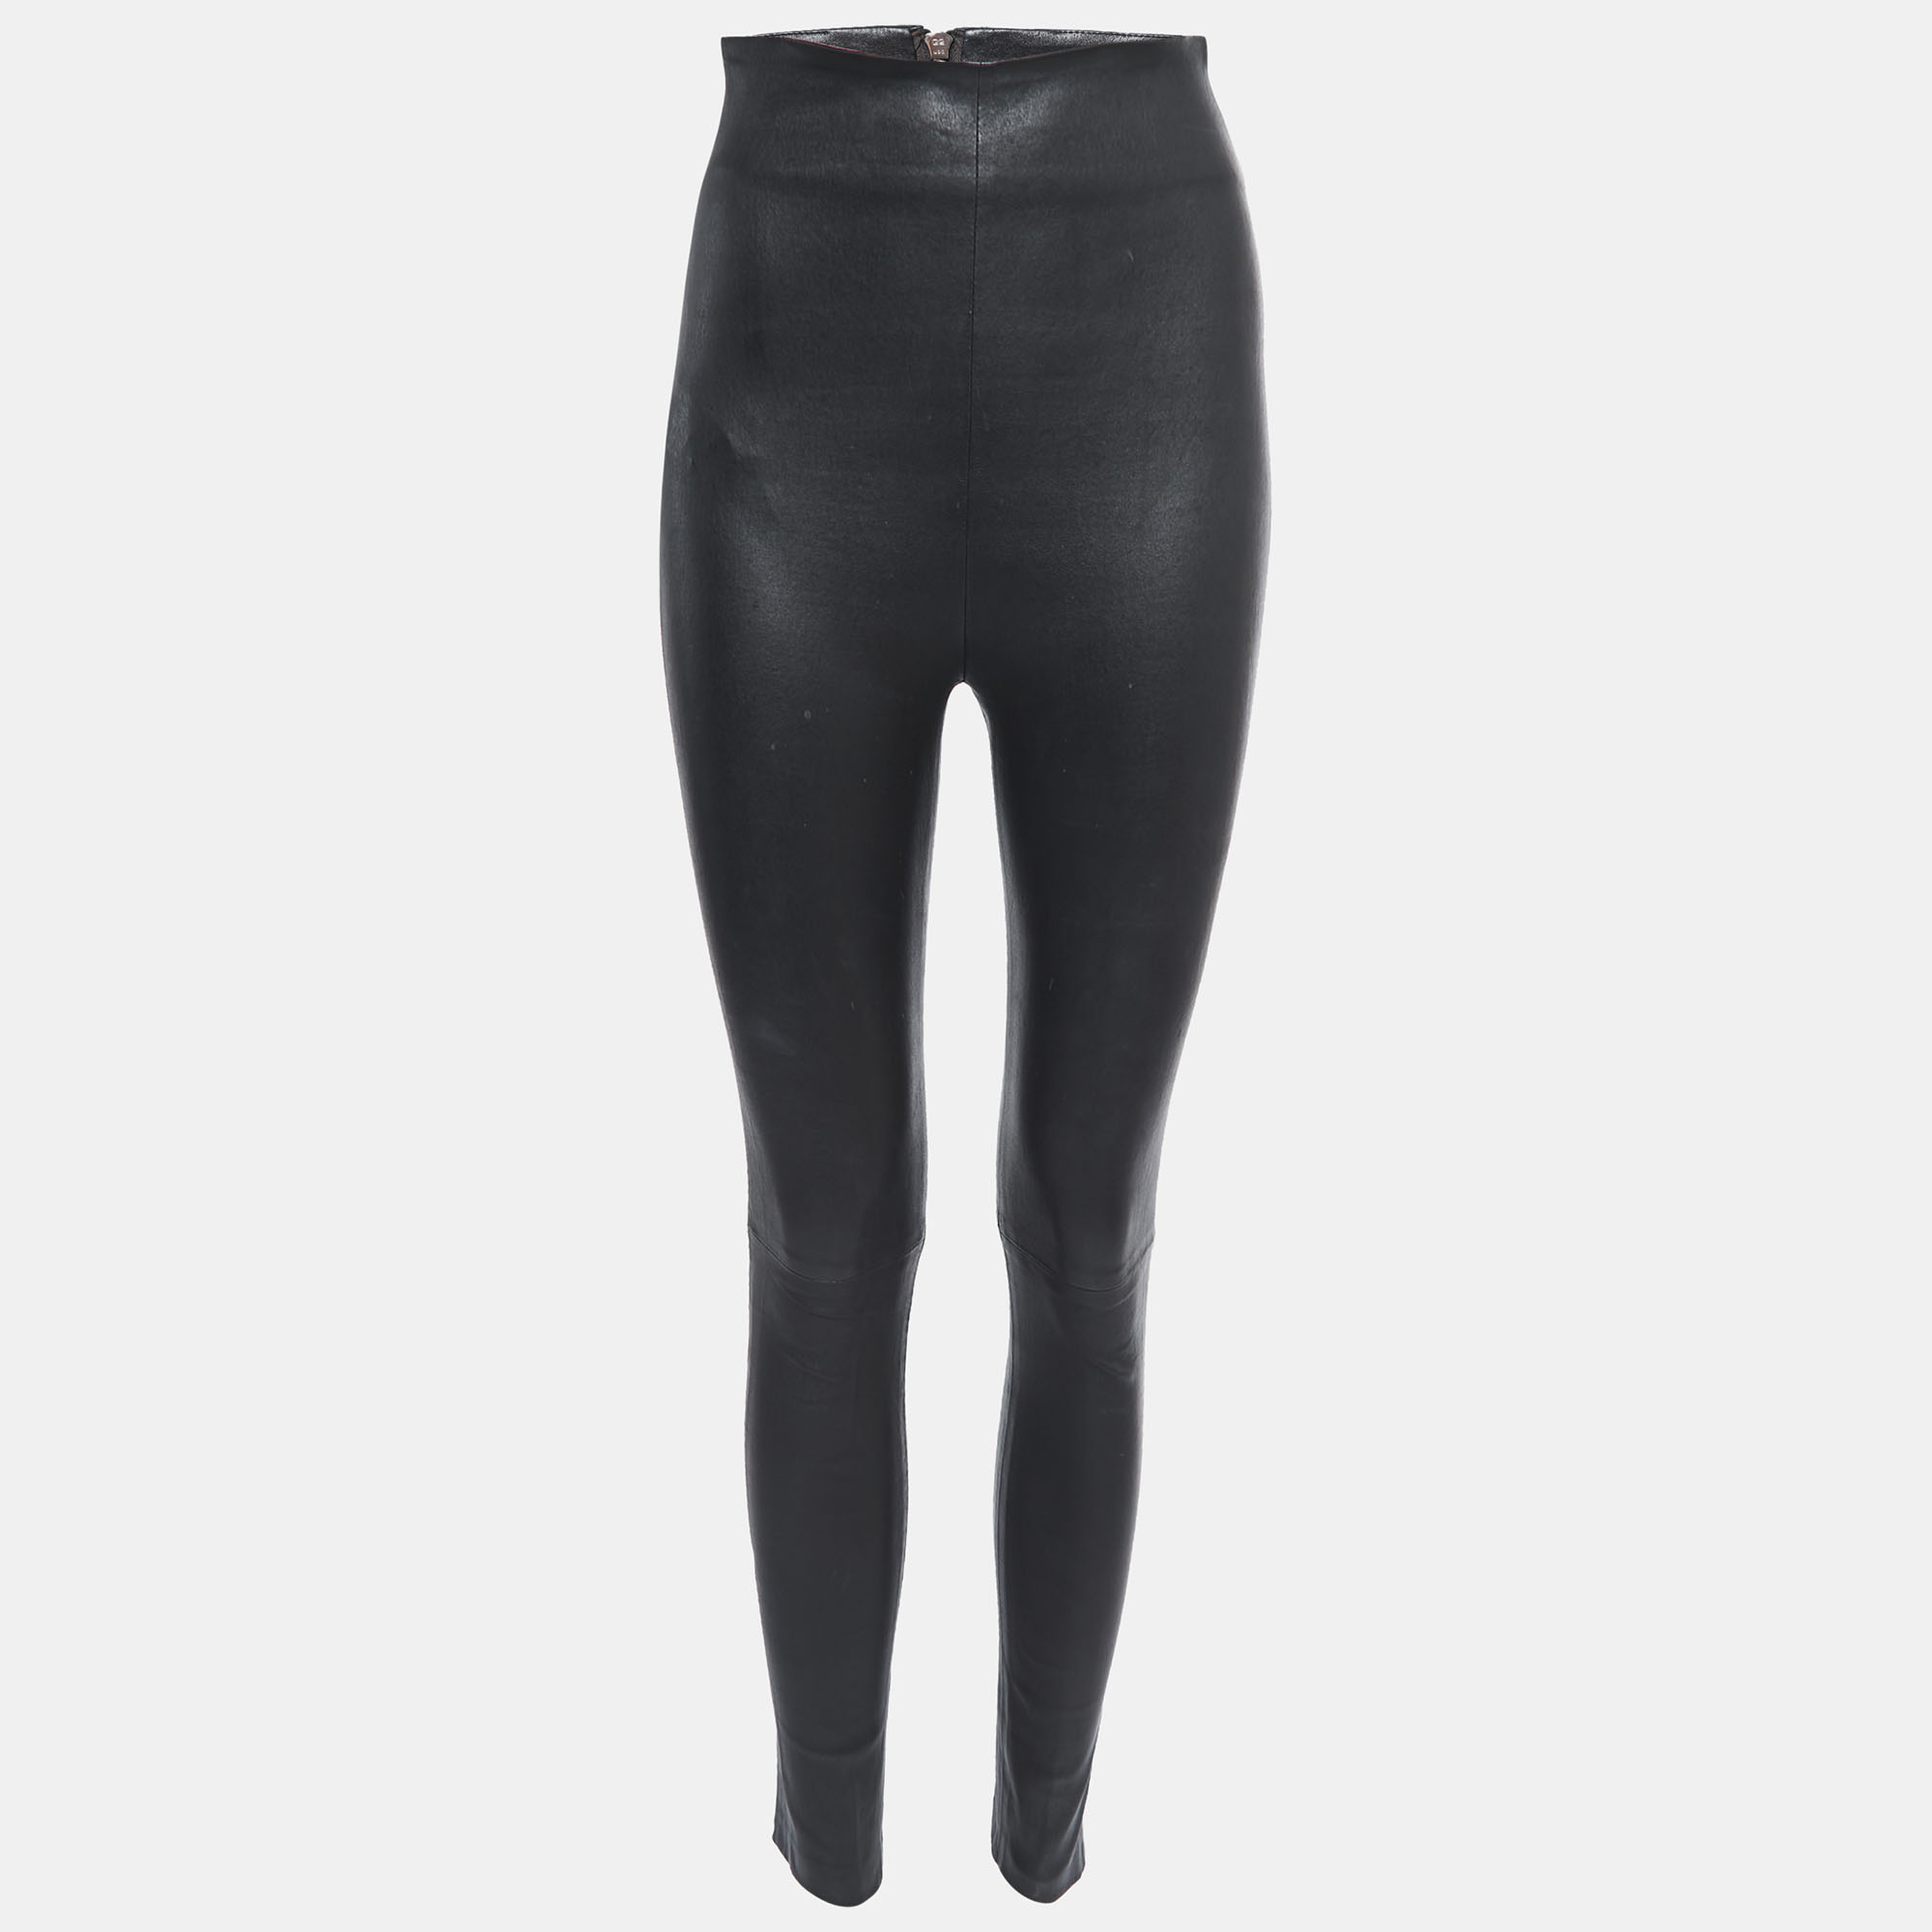 Sablyn black leather skinny leggings xs